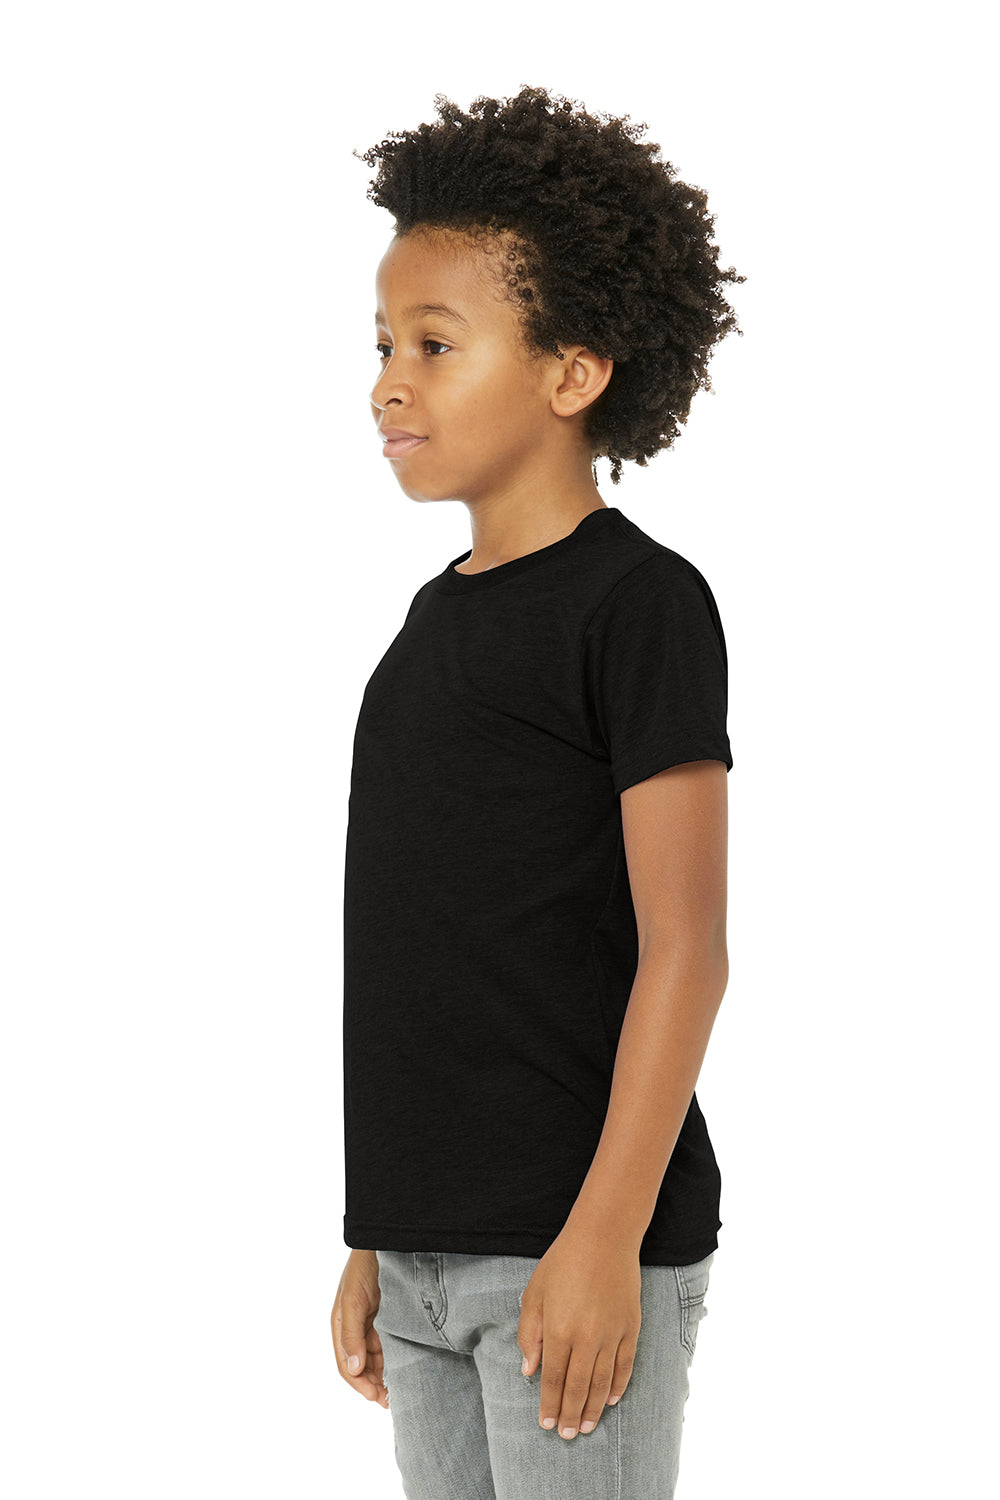 Bella + Canvas 3413Y Youth Short Sleeve Crewneck T-Shirt Solid Black Model 3Q